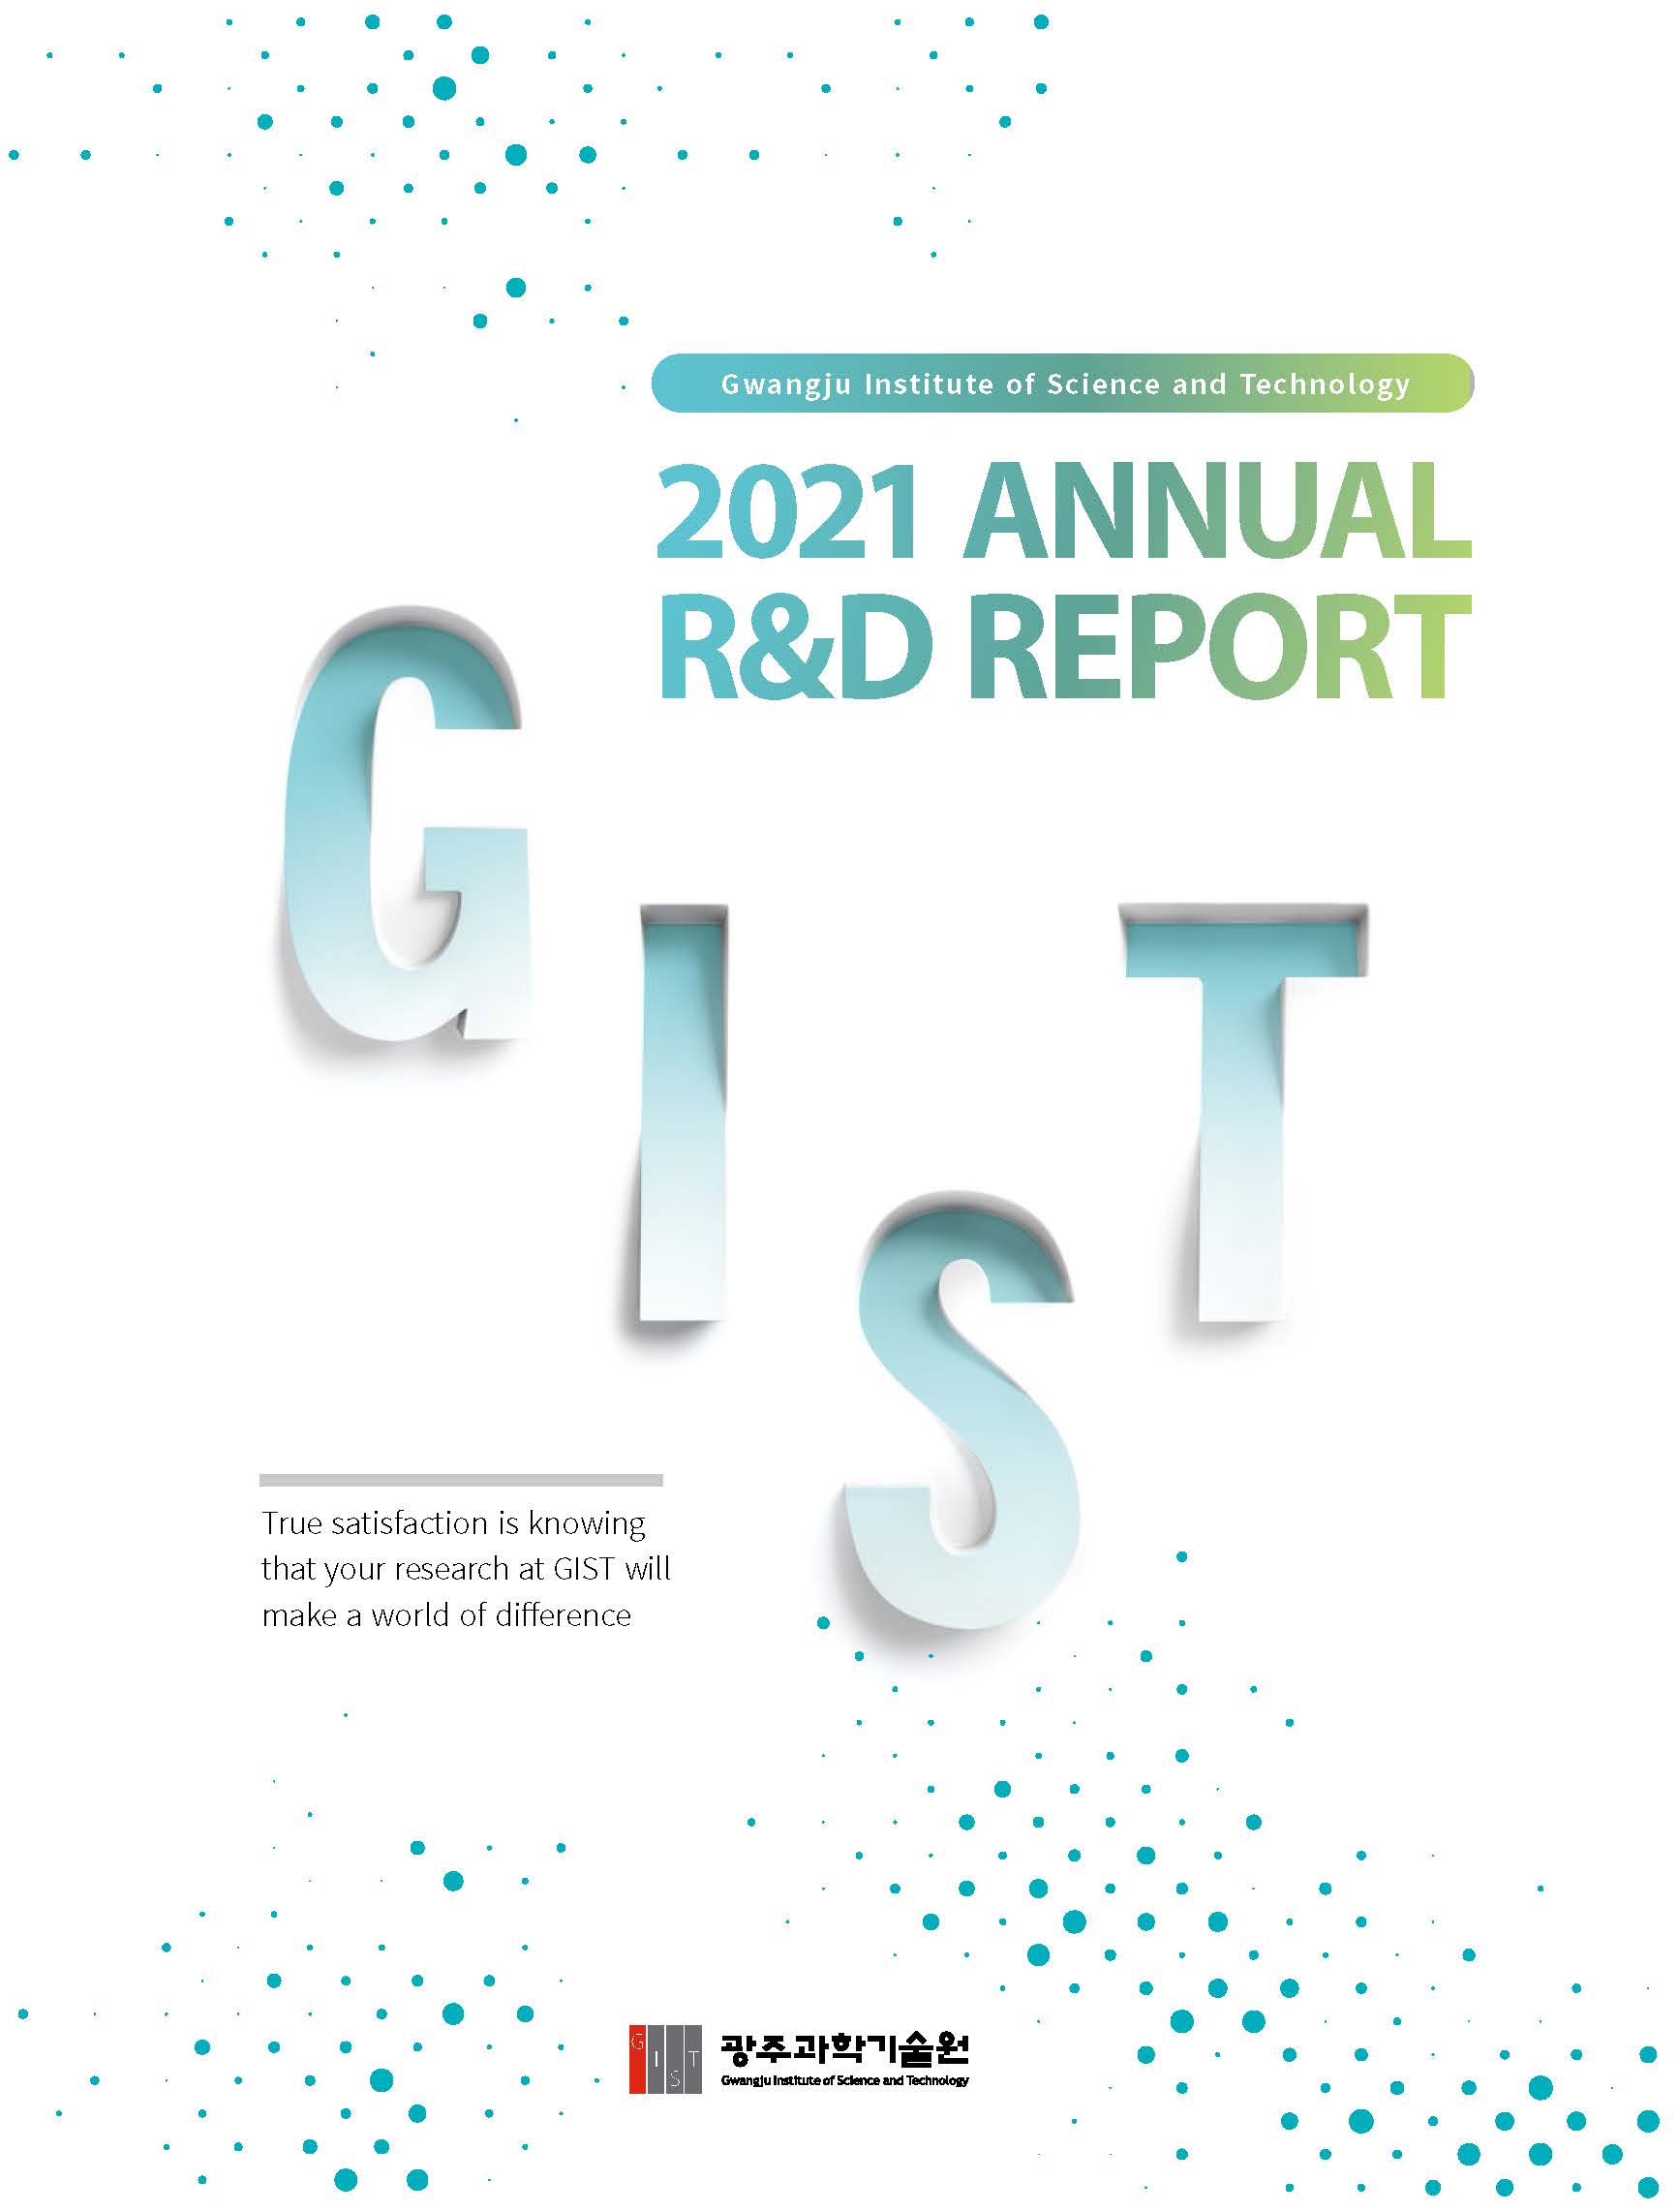 [Korean] GIST ANNUAL R&D REPORT 2021 이미지